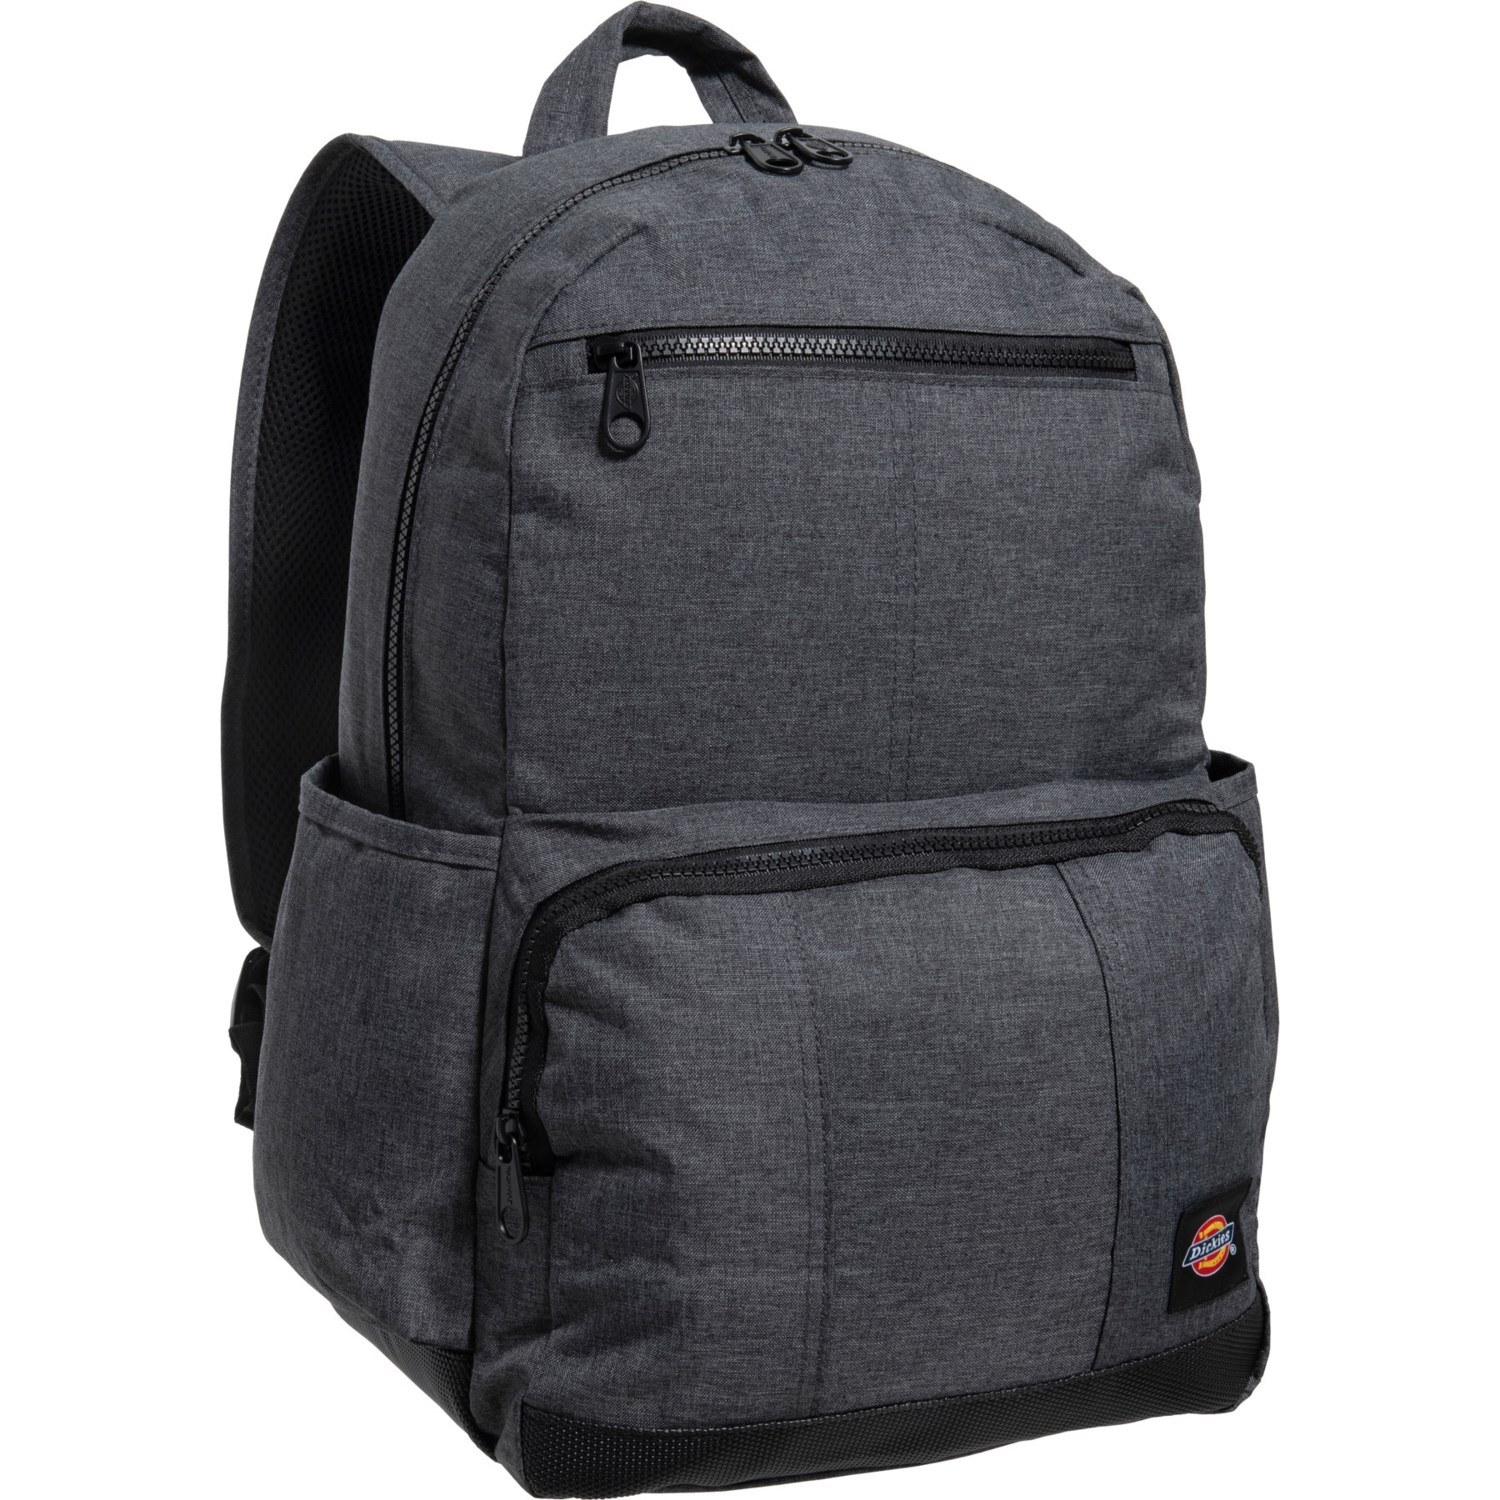 Dickies Journeyman Backpack - Charcoal Grey - Save 57%